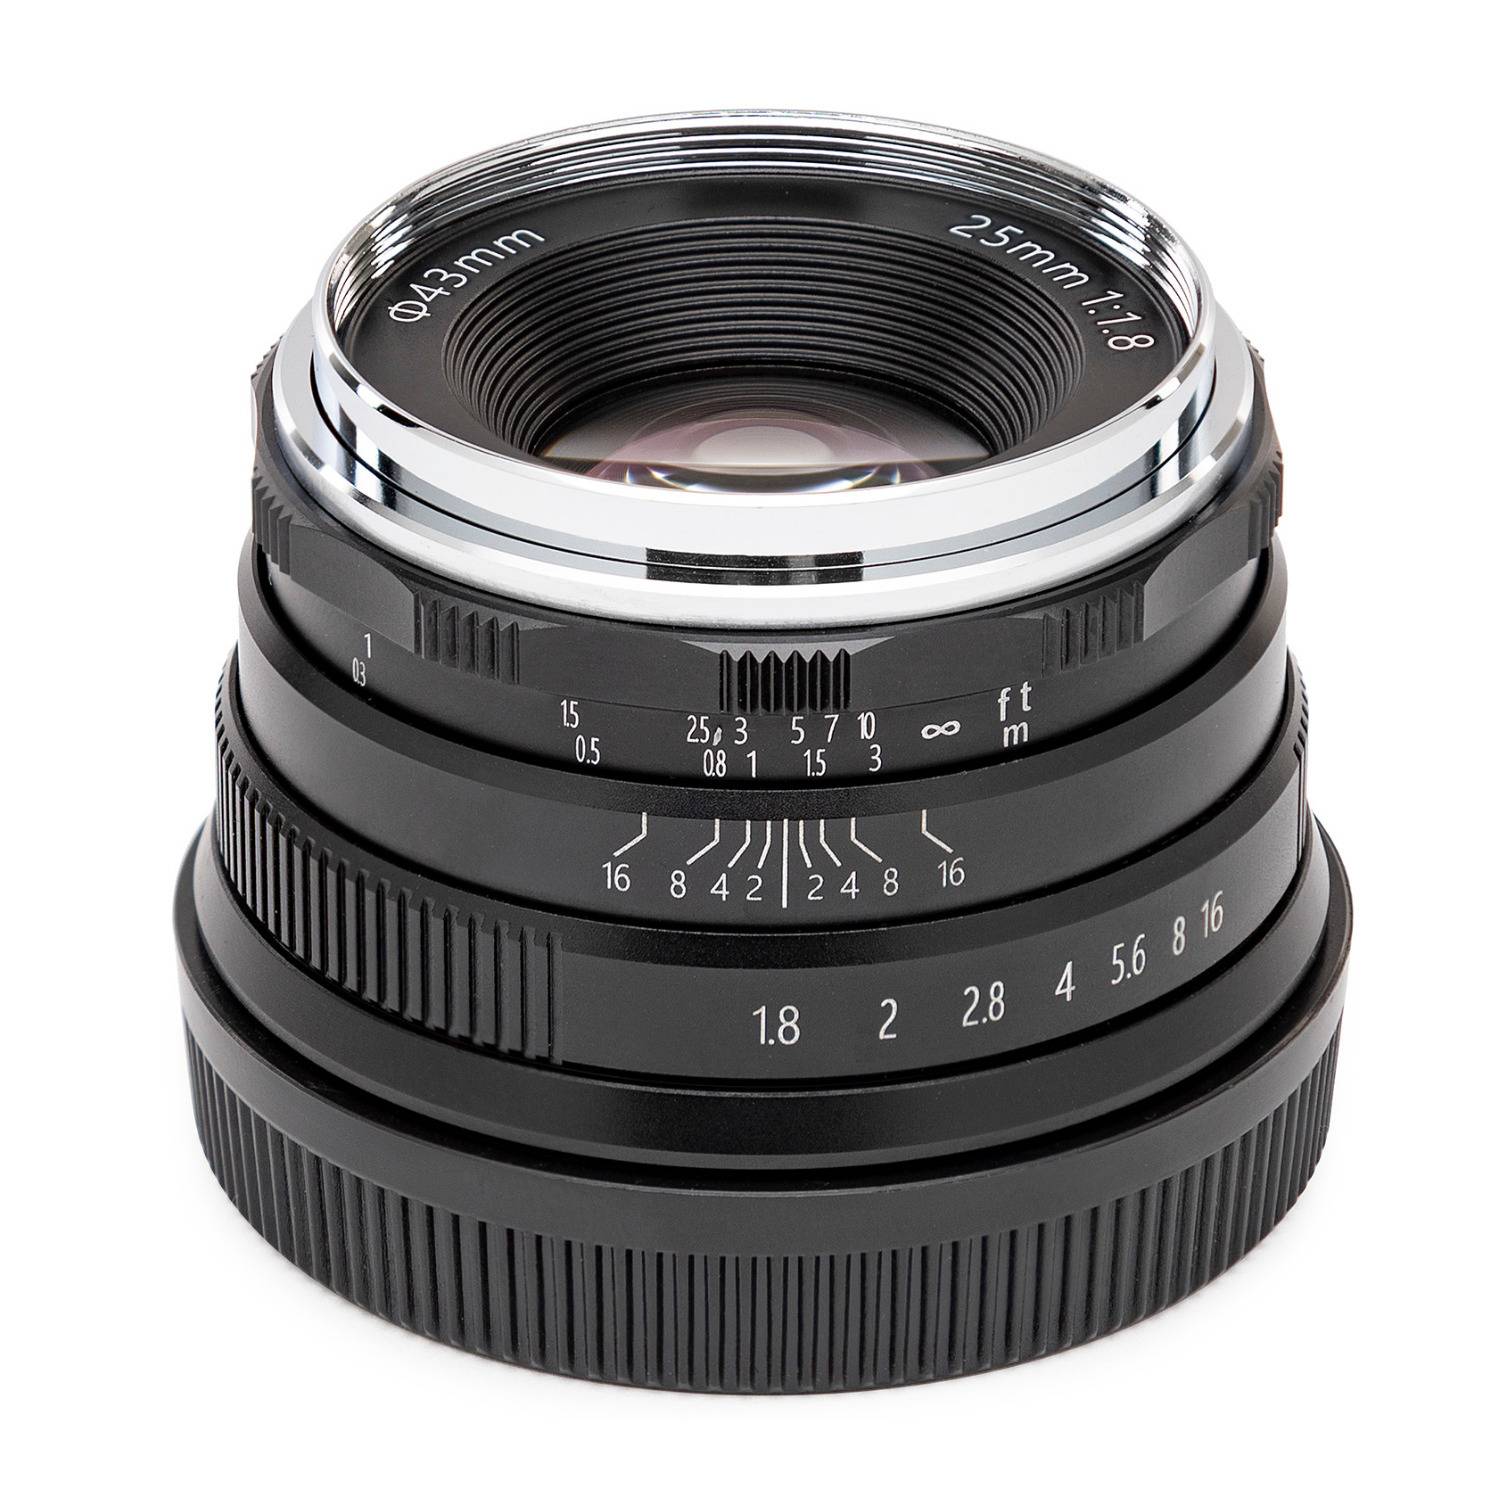 Koah Artisans Series 25mm f/1.8 Large Aperture Manual Focus Lens for Micro Four Thirds (Black)